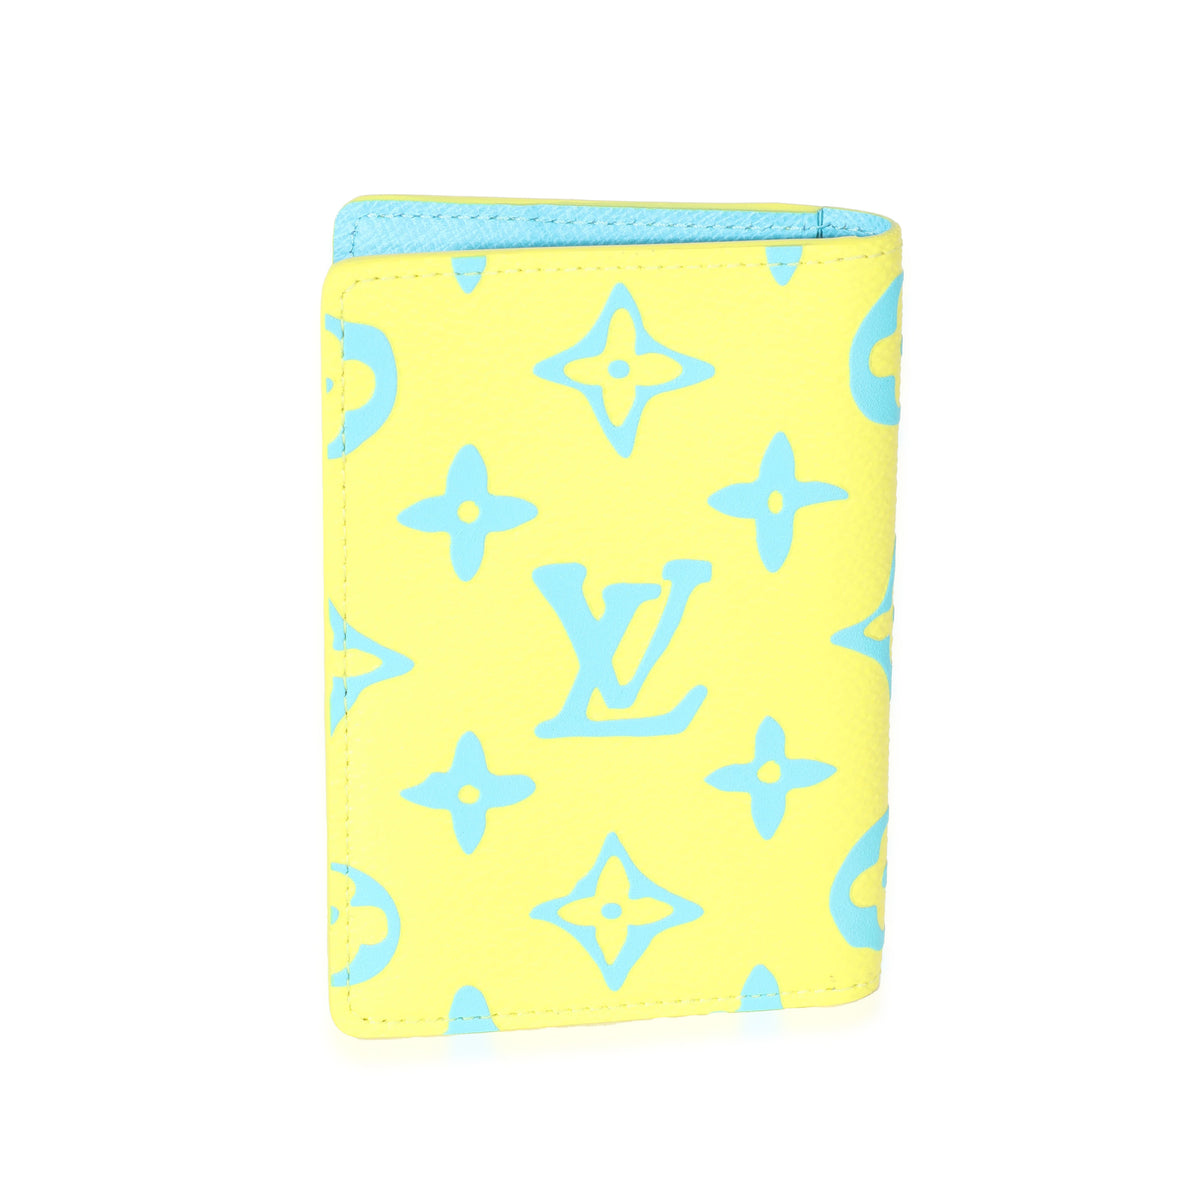 Louis Vuitton Monogram Canvas Pocket Agenda Cover, myGemma